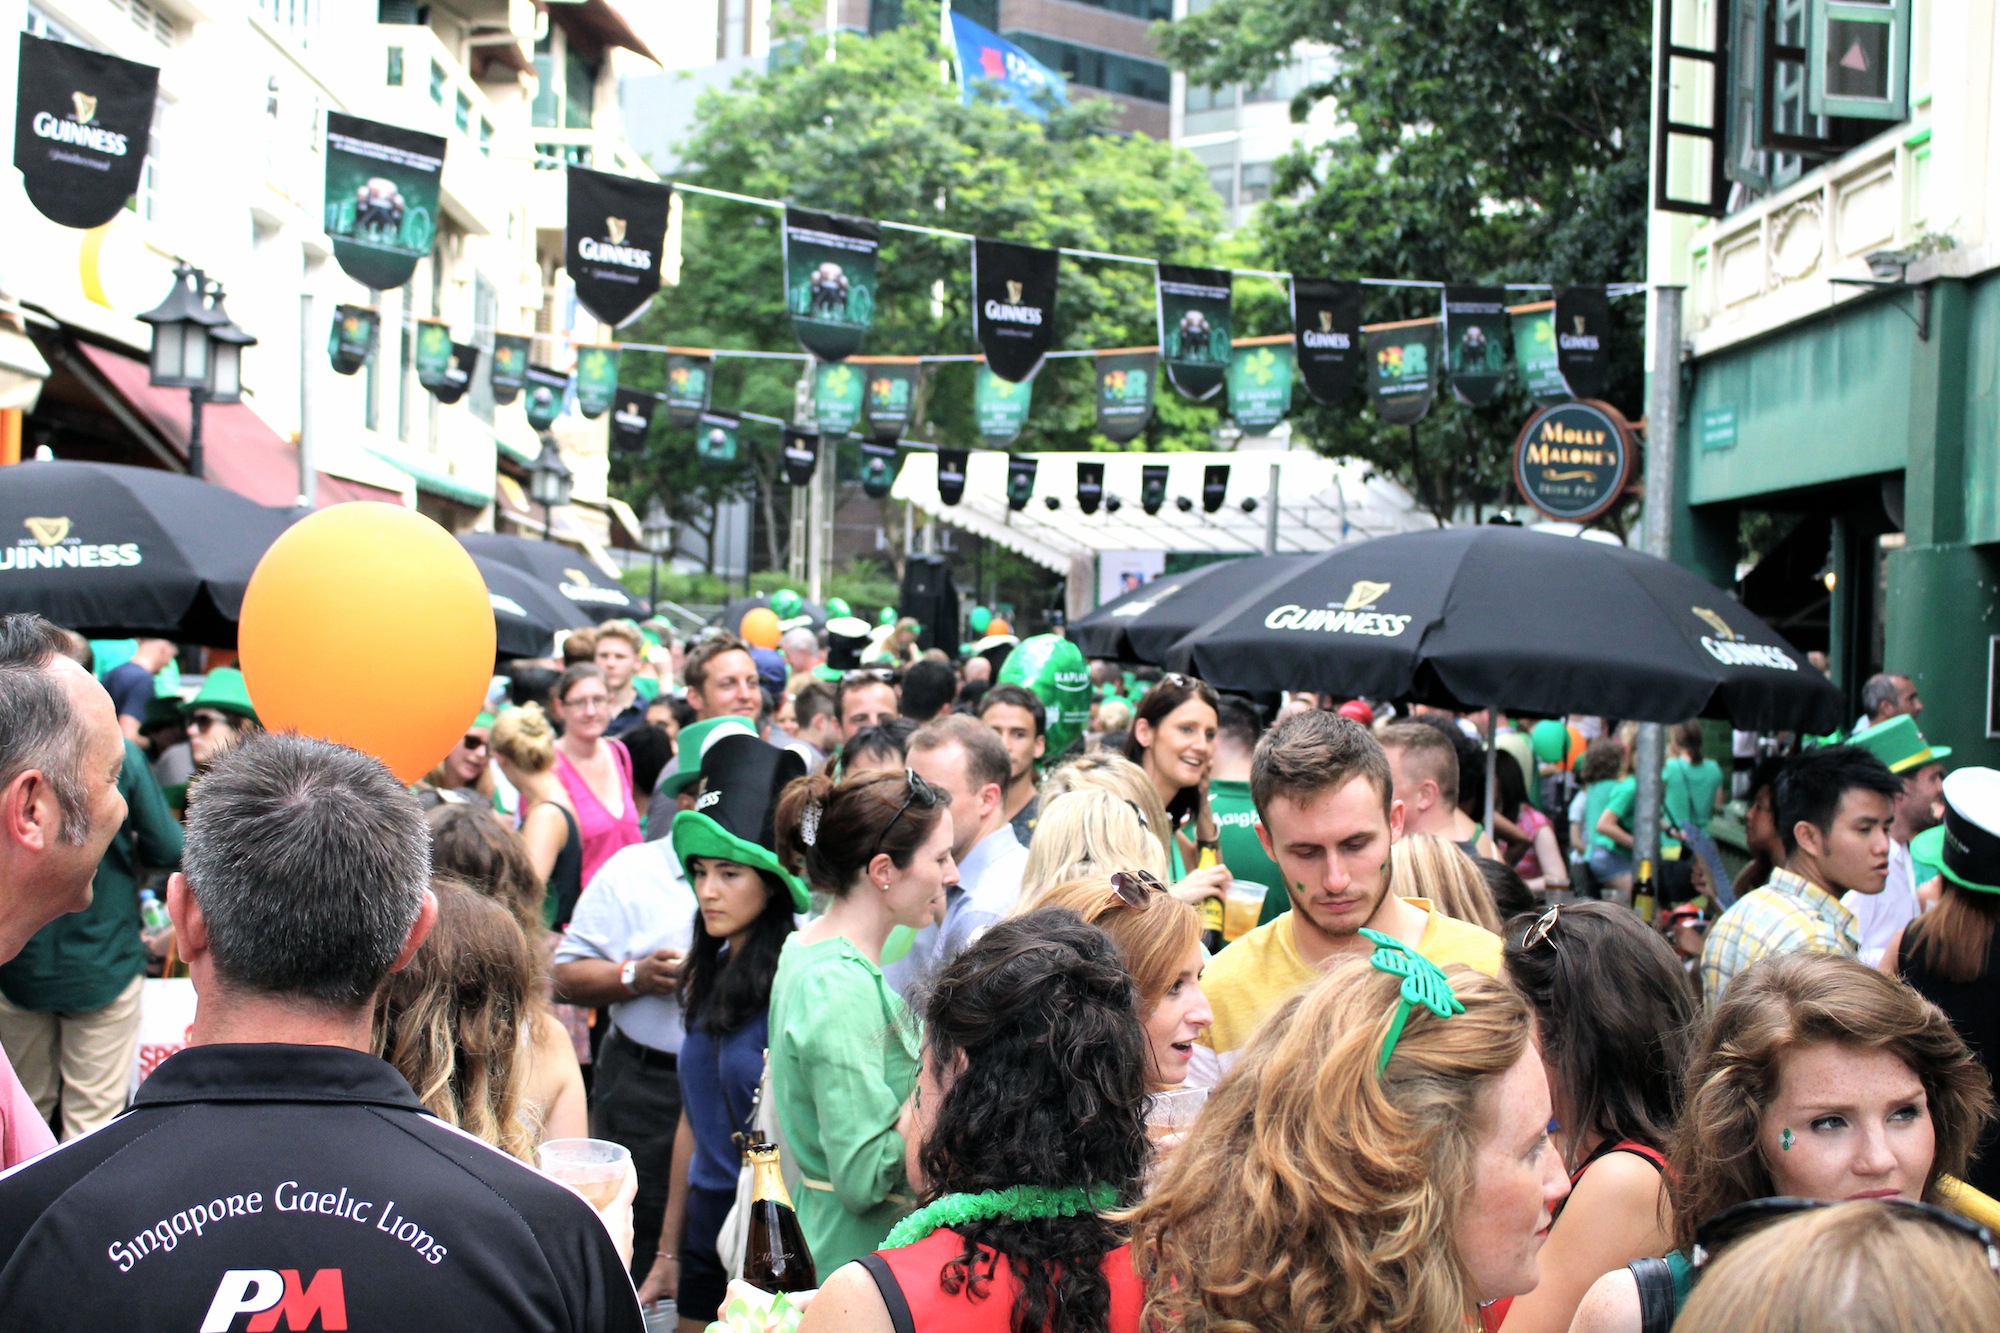 St Patrick’s Day 2015: Street Festival with Guinness - Alvinology